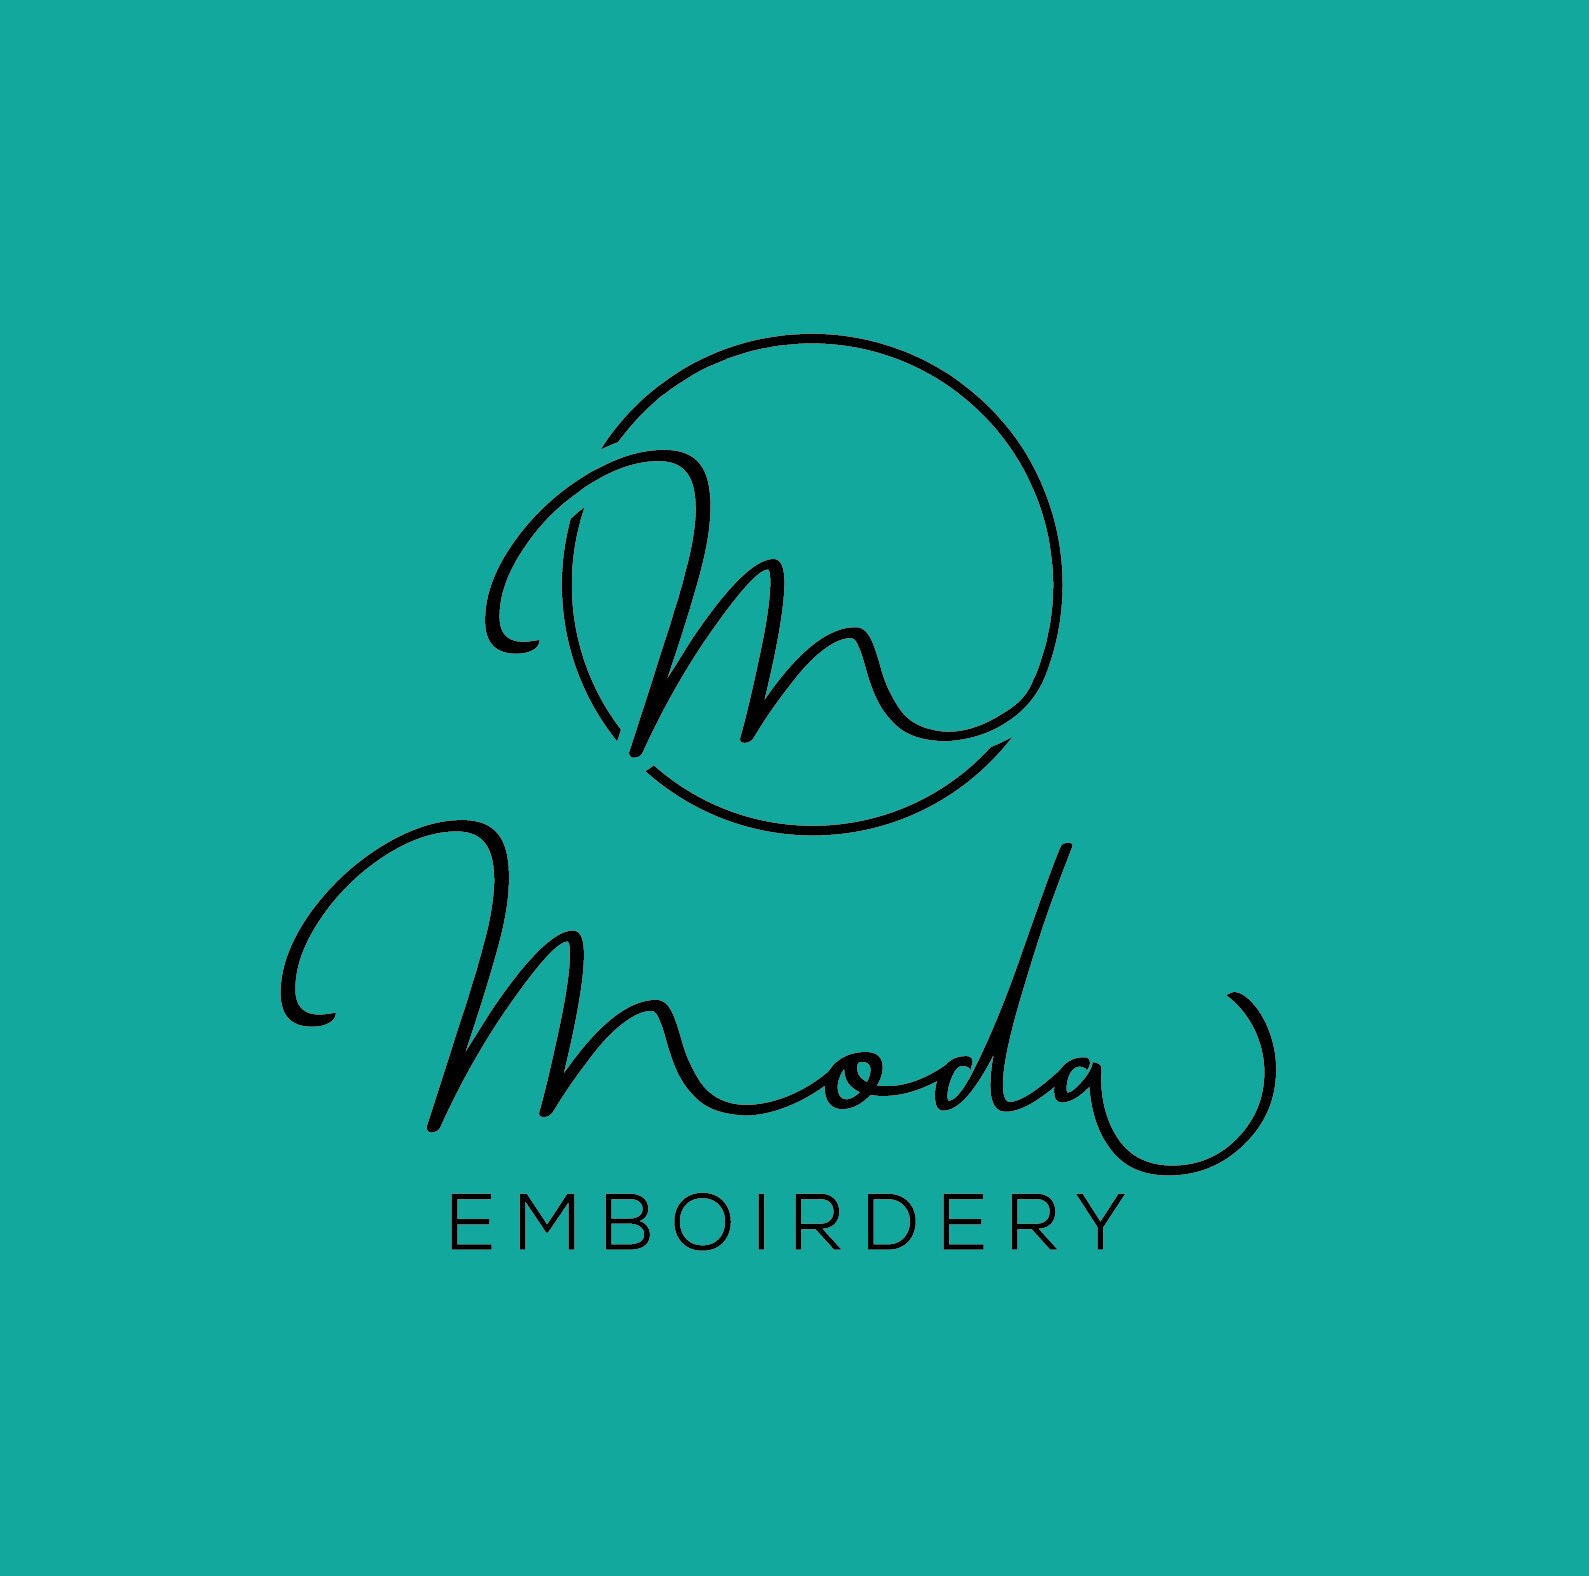 Moda Embroidery by MODAEMB on Etsy